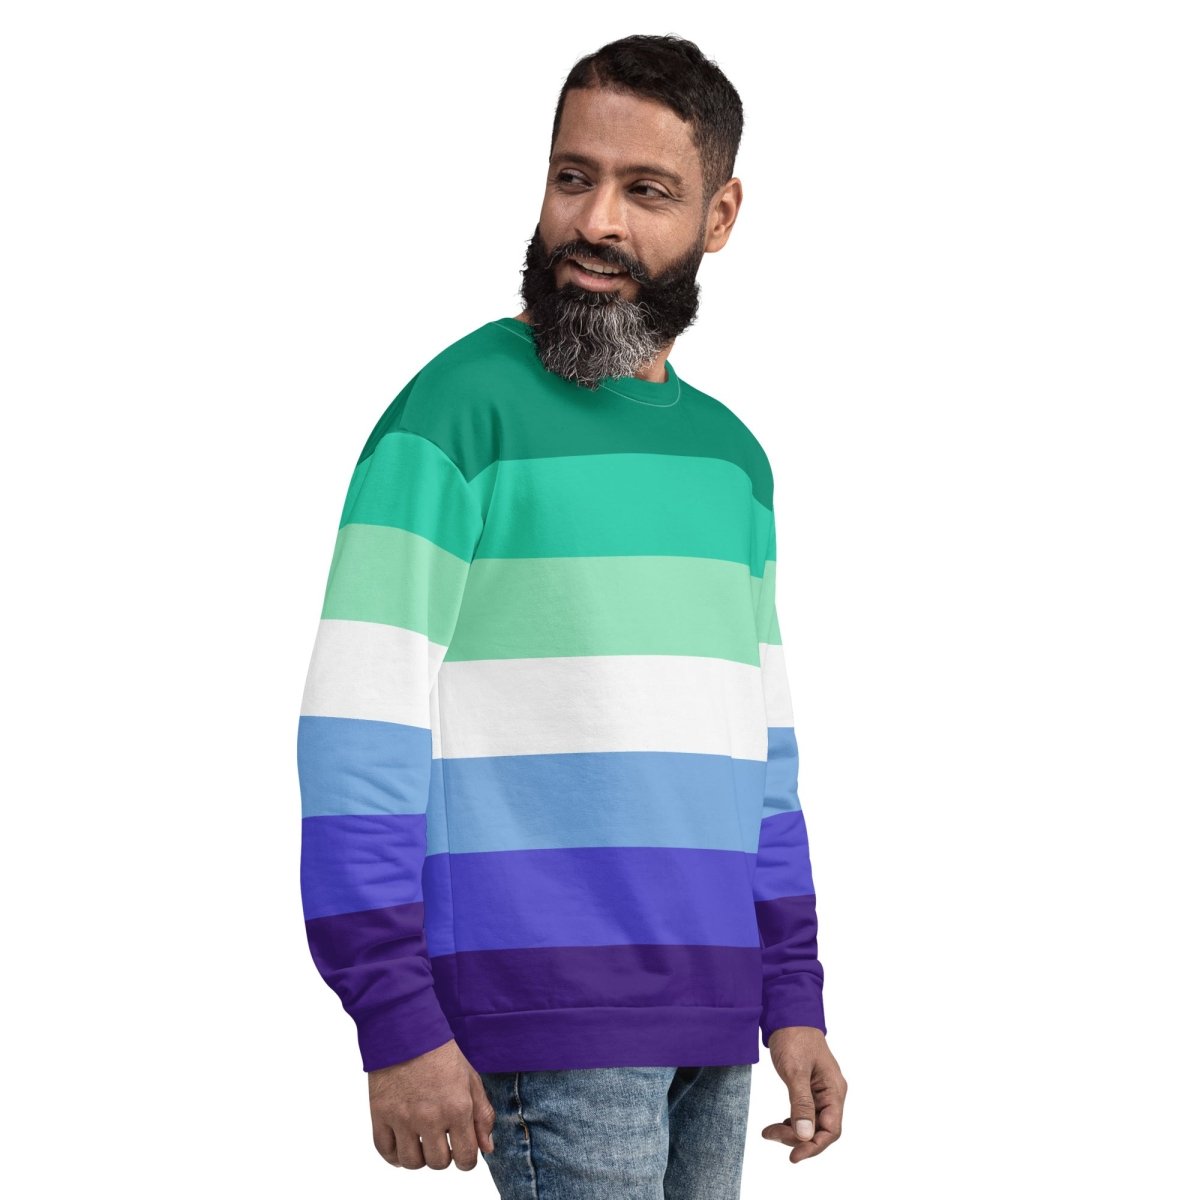 MLM Flag Sweatshirt - On Trend Shirts